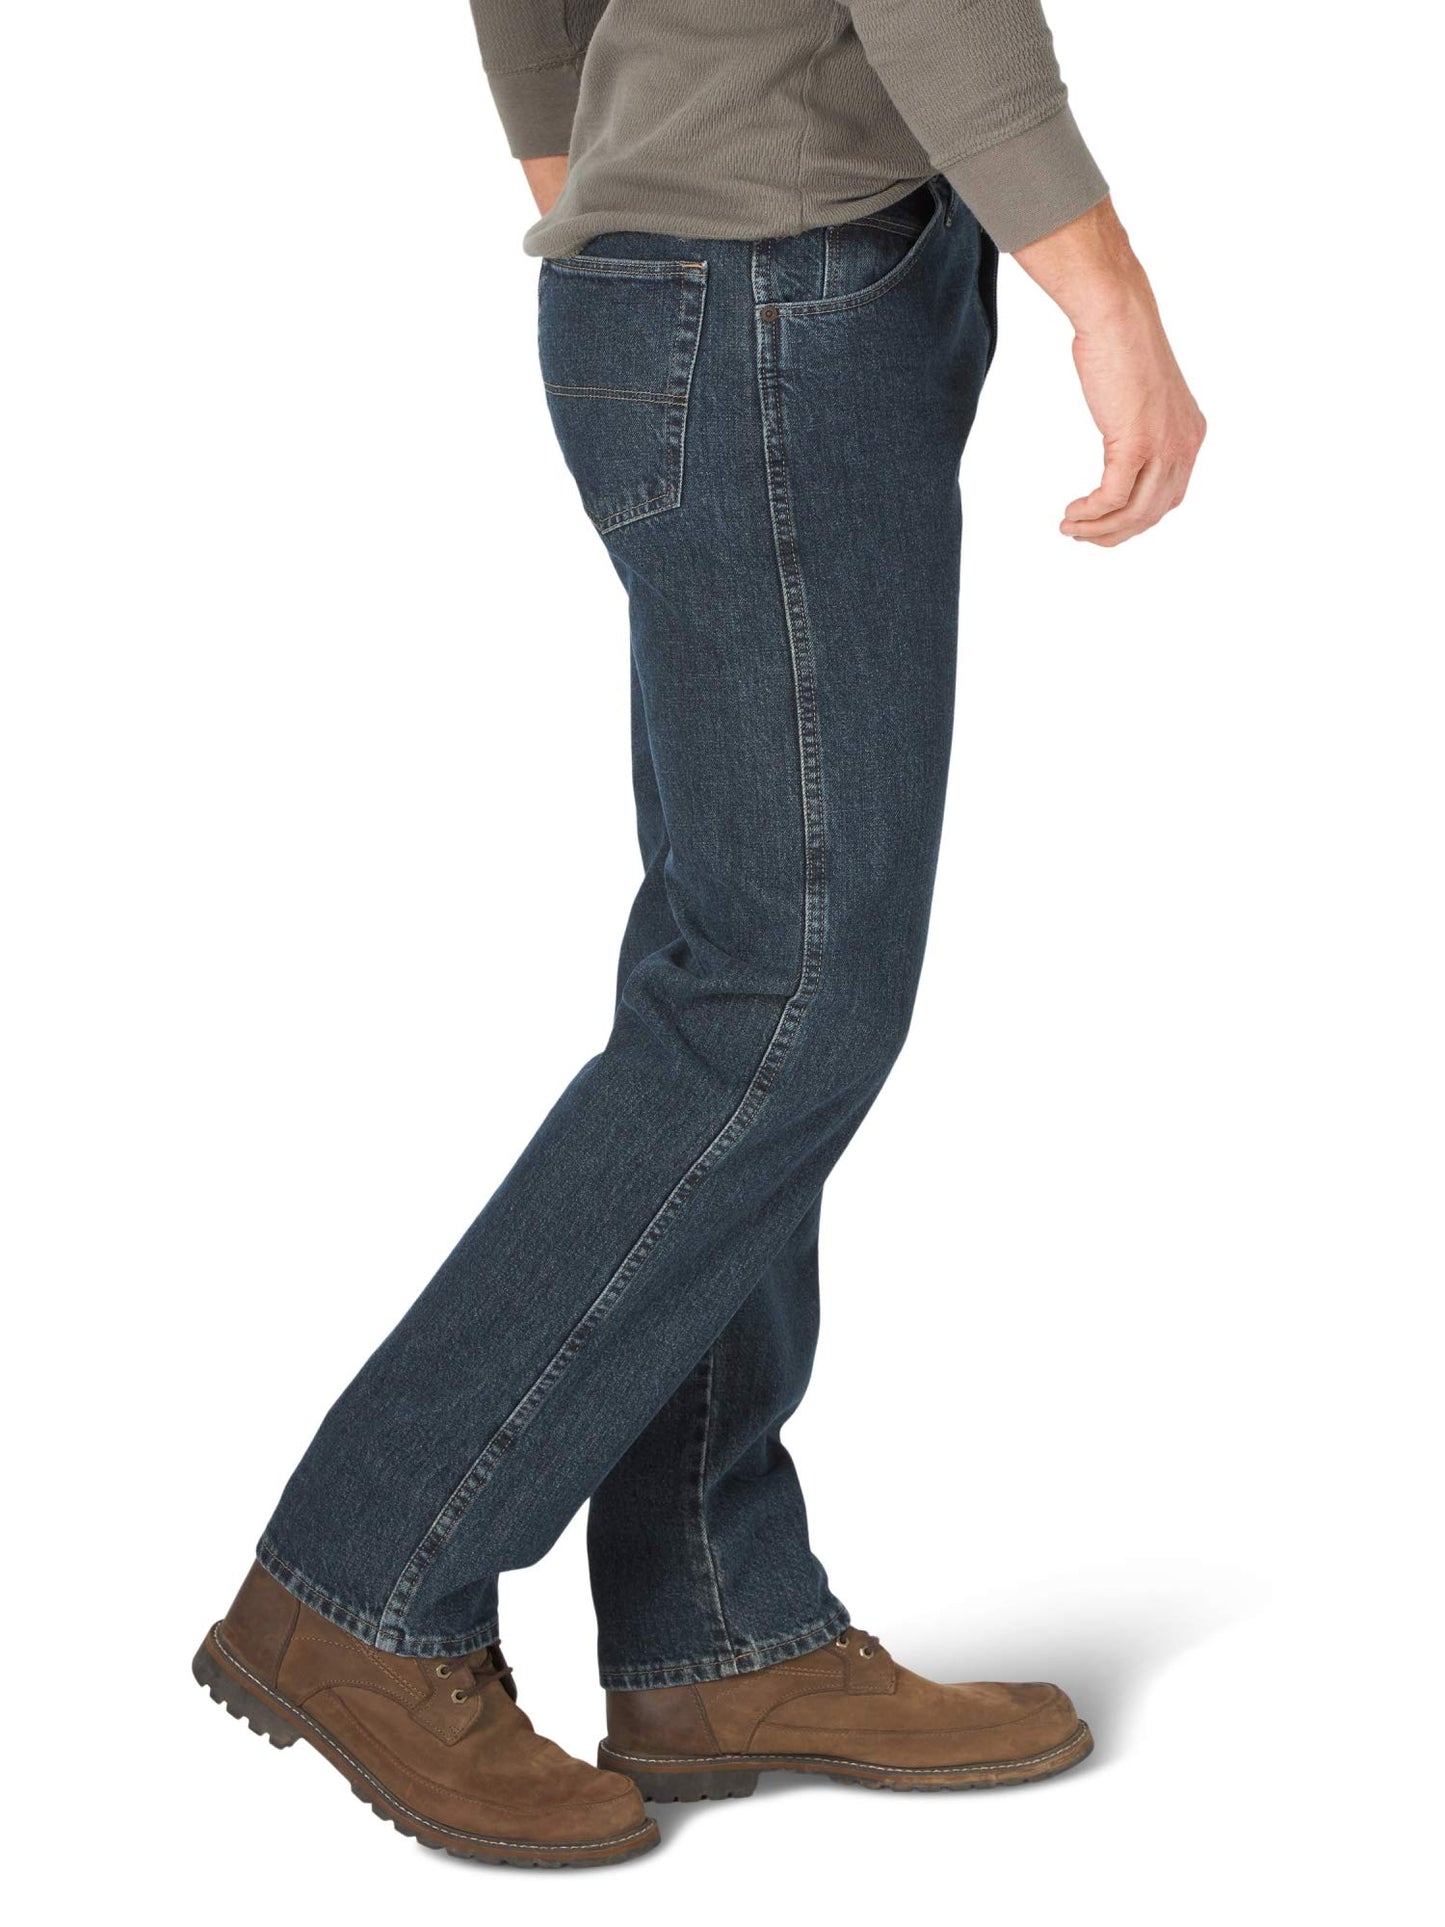 Wrangler Authentics Men's Classic 5-Pocket Regular Fit Cotton Jean, Storm, 32W x 34L